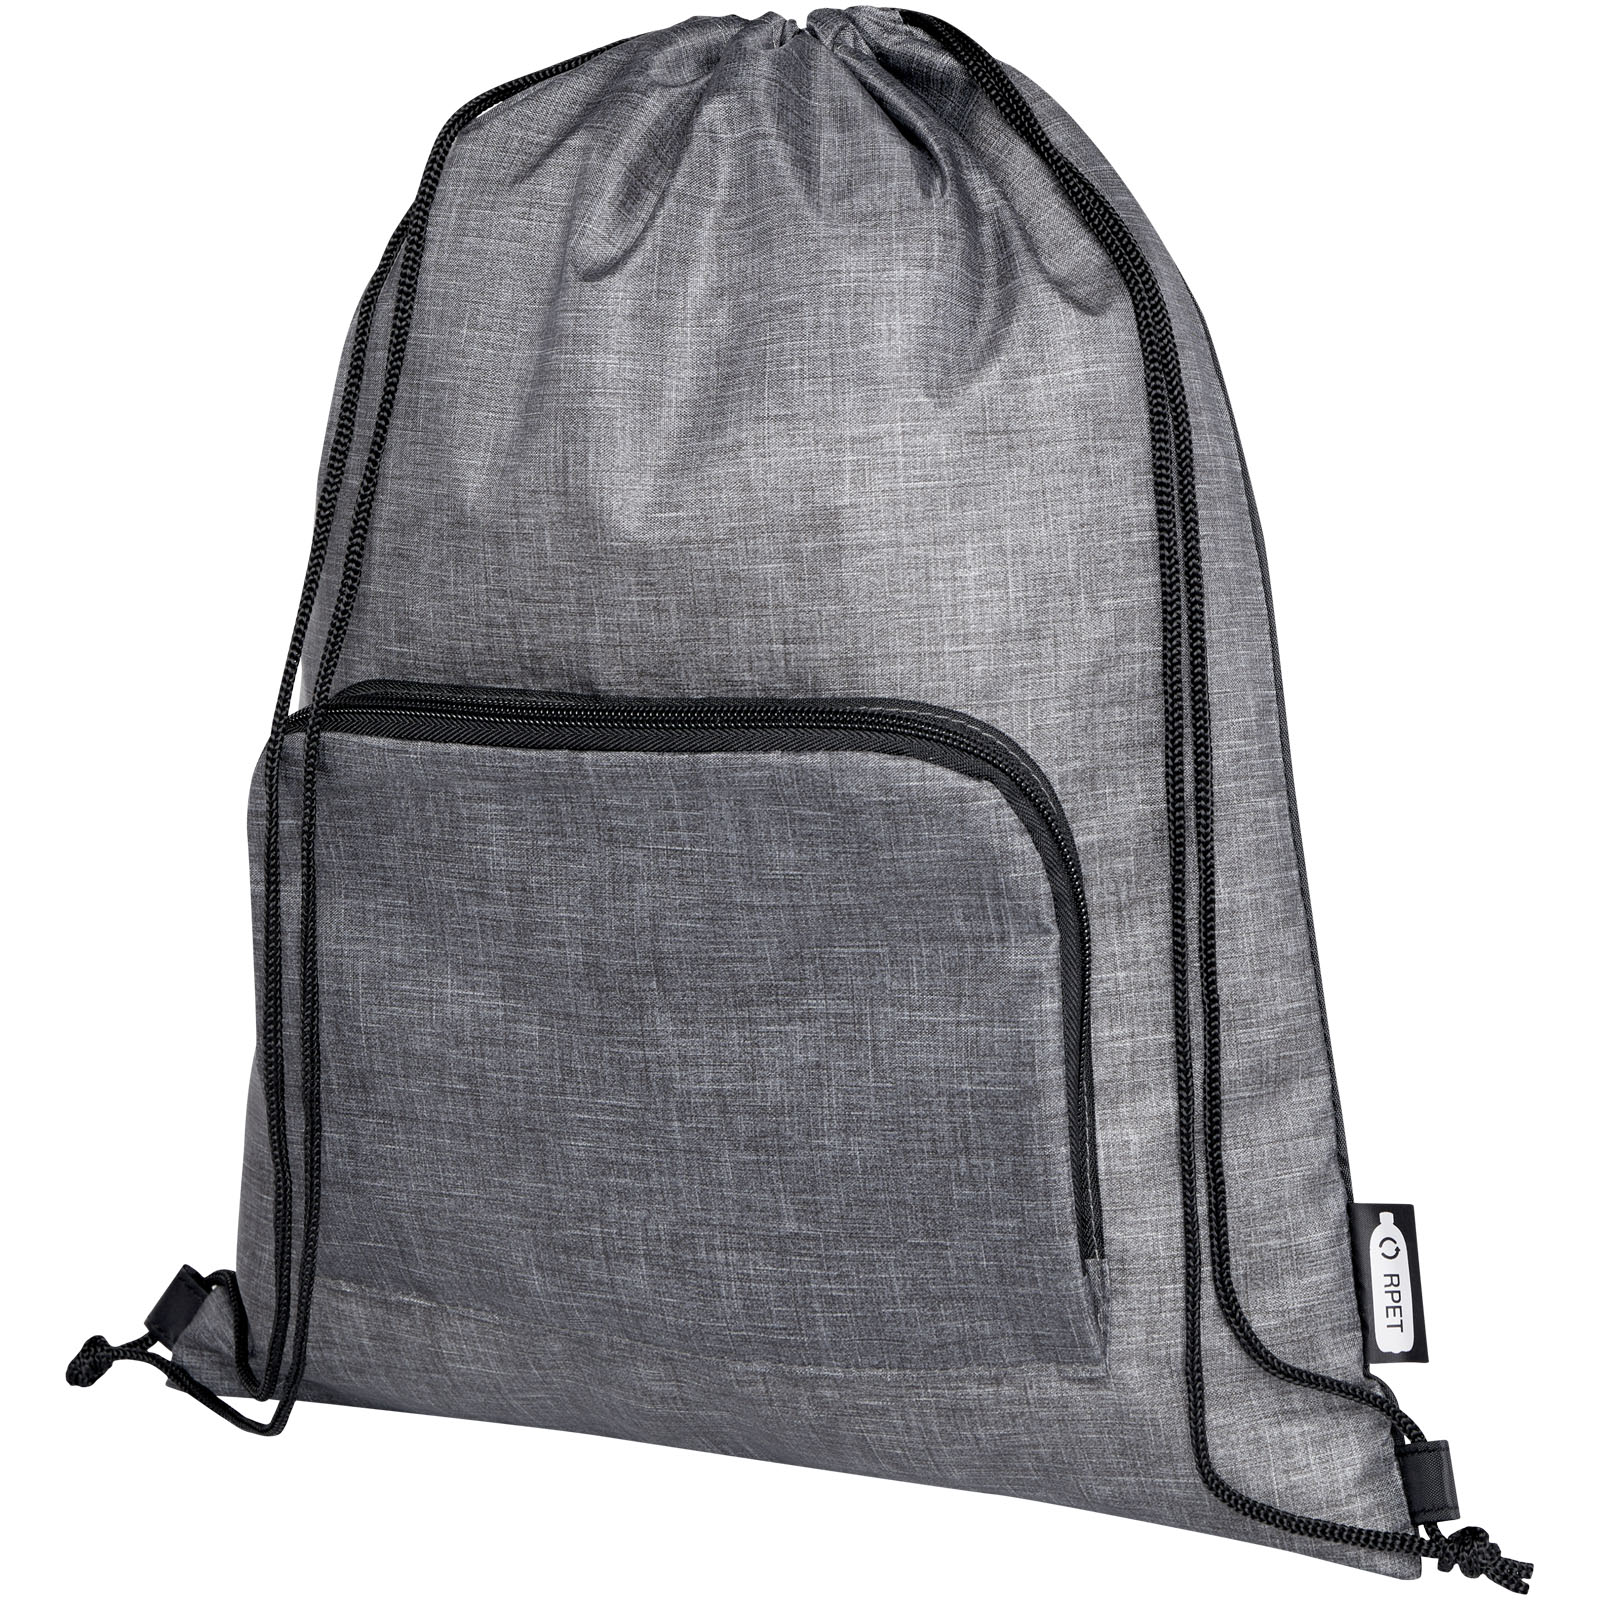 Bags - Ash recycled foldable drawstring bag 7L